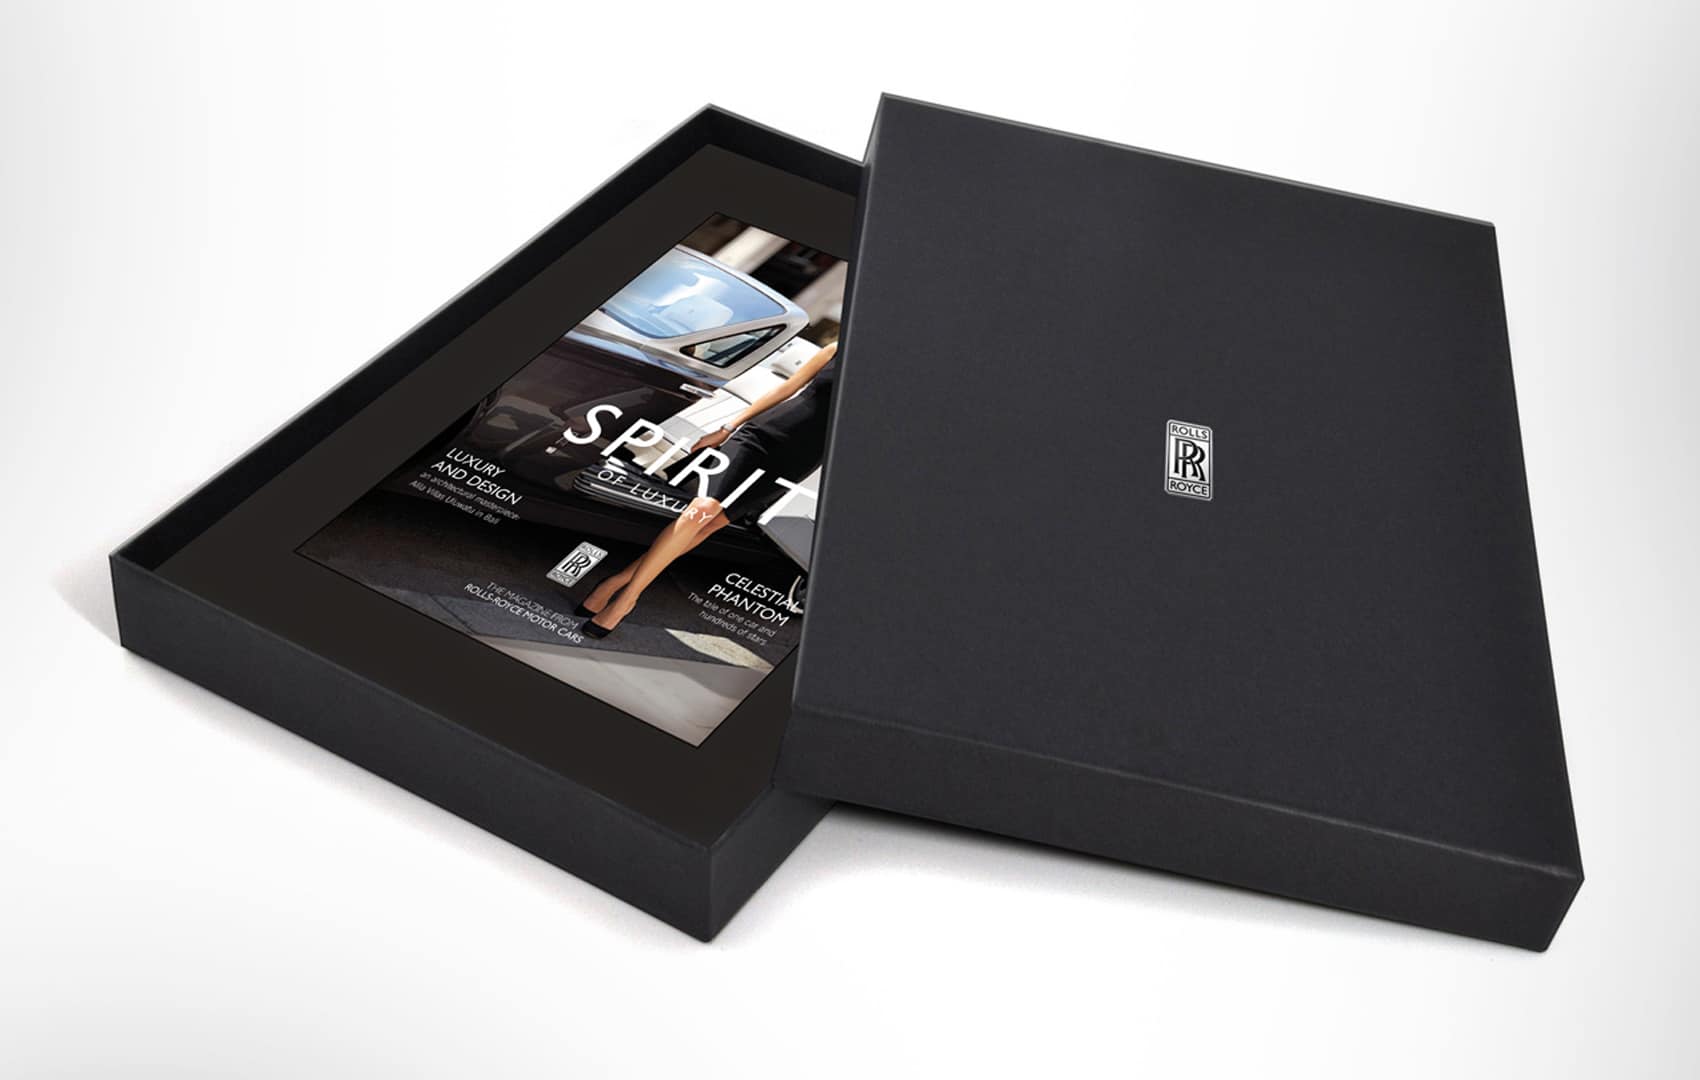 Rolls-Royce Luxury Magazine and Presentation Box